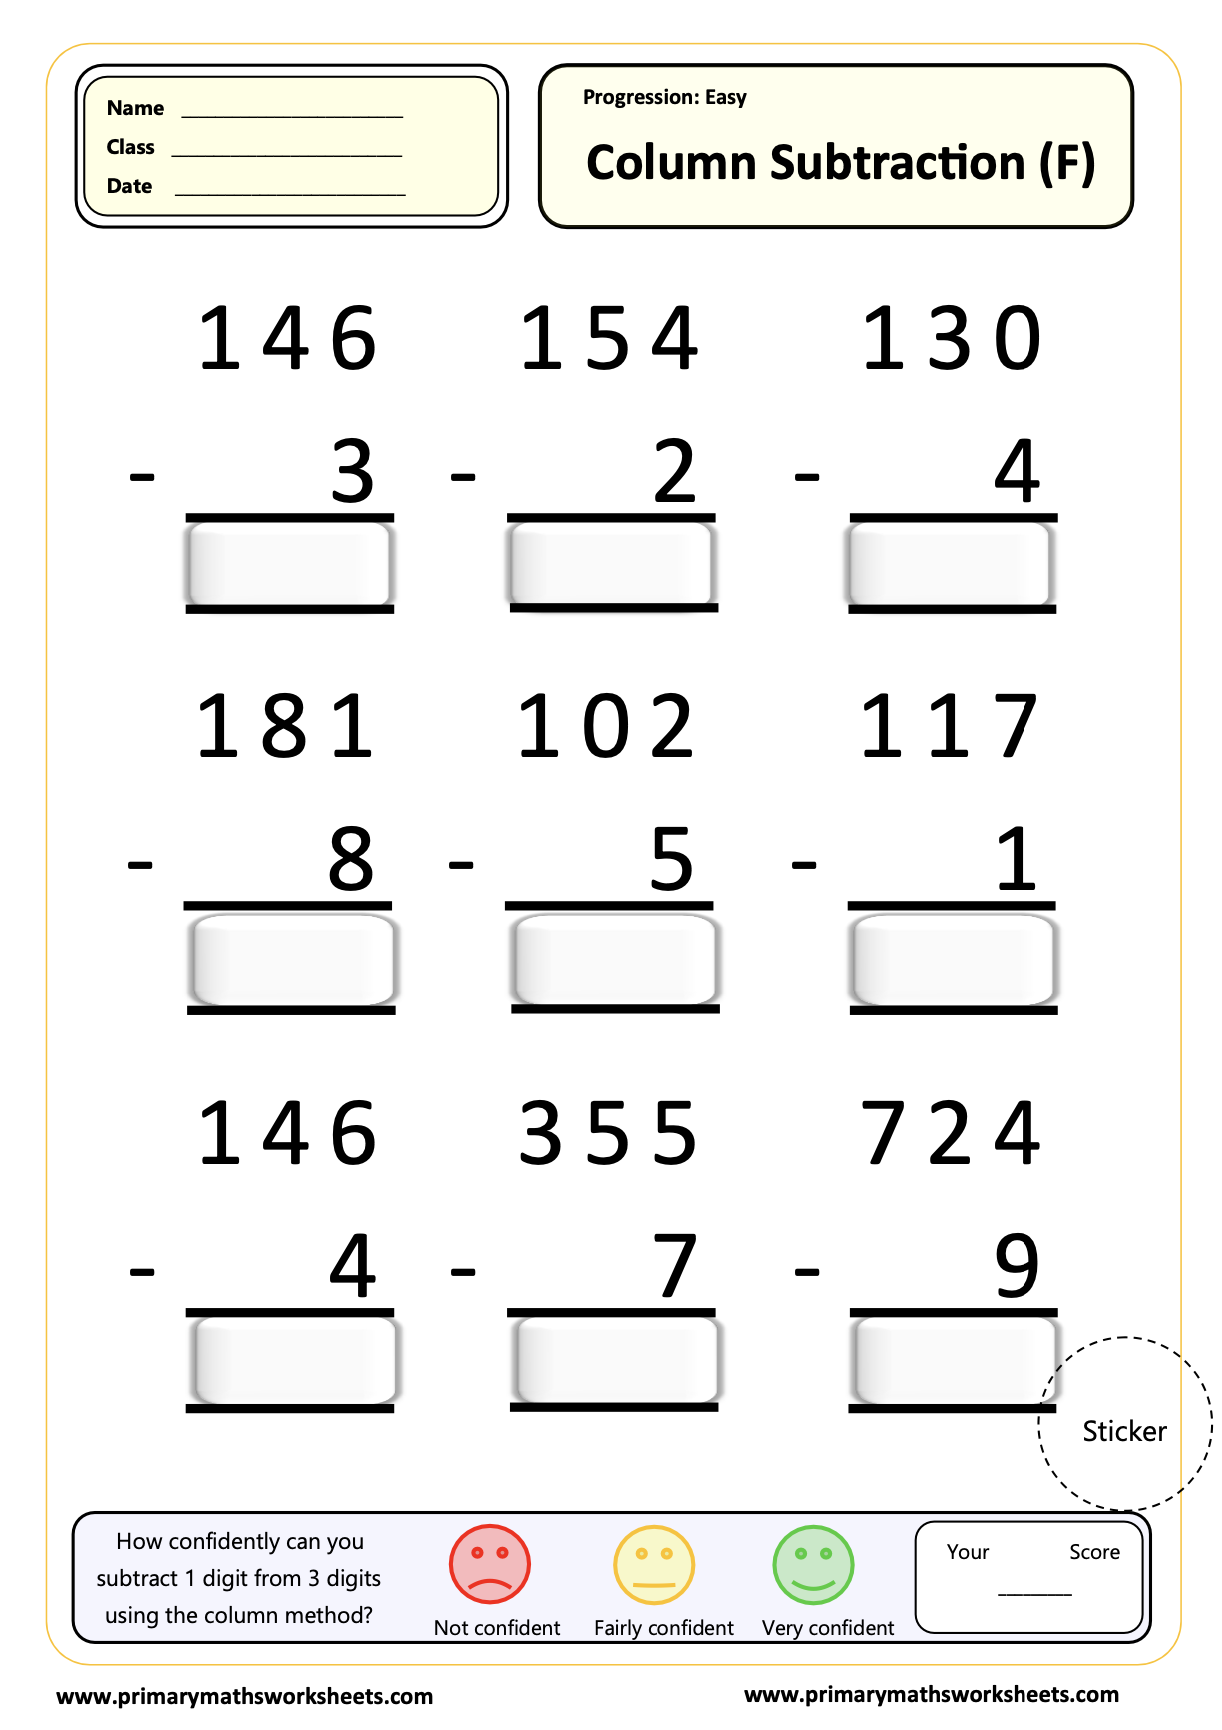 Column Subtraction (F) Worksheet